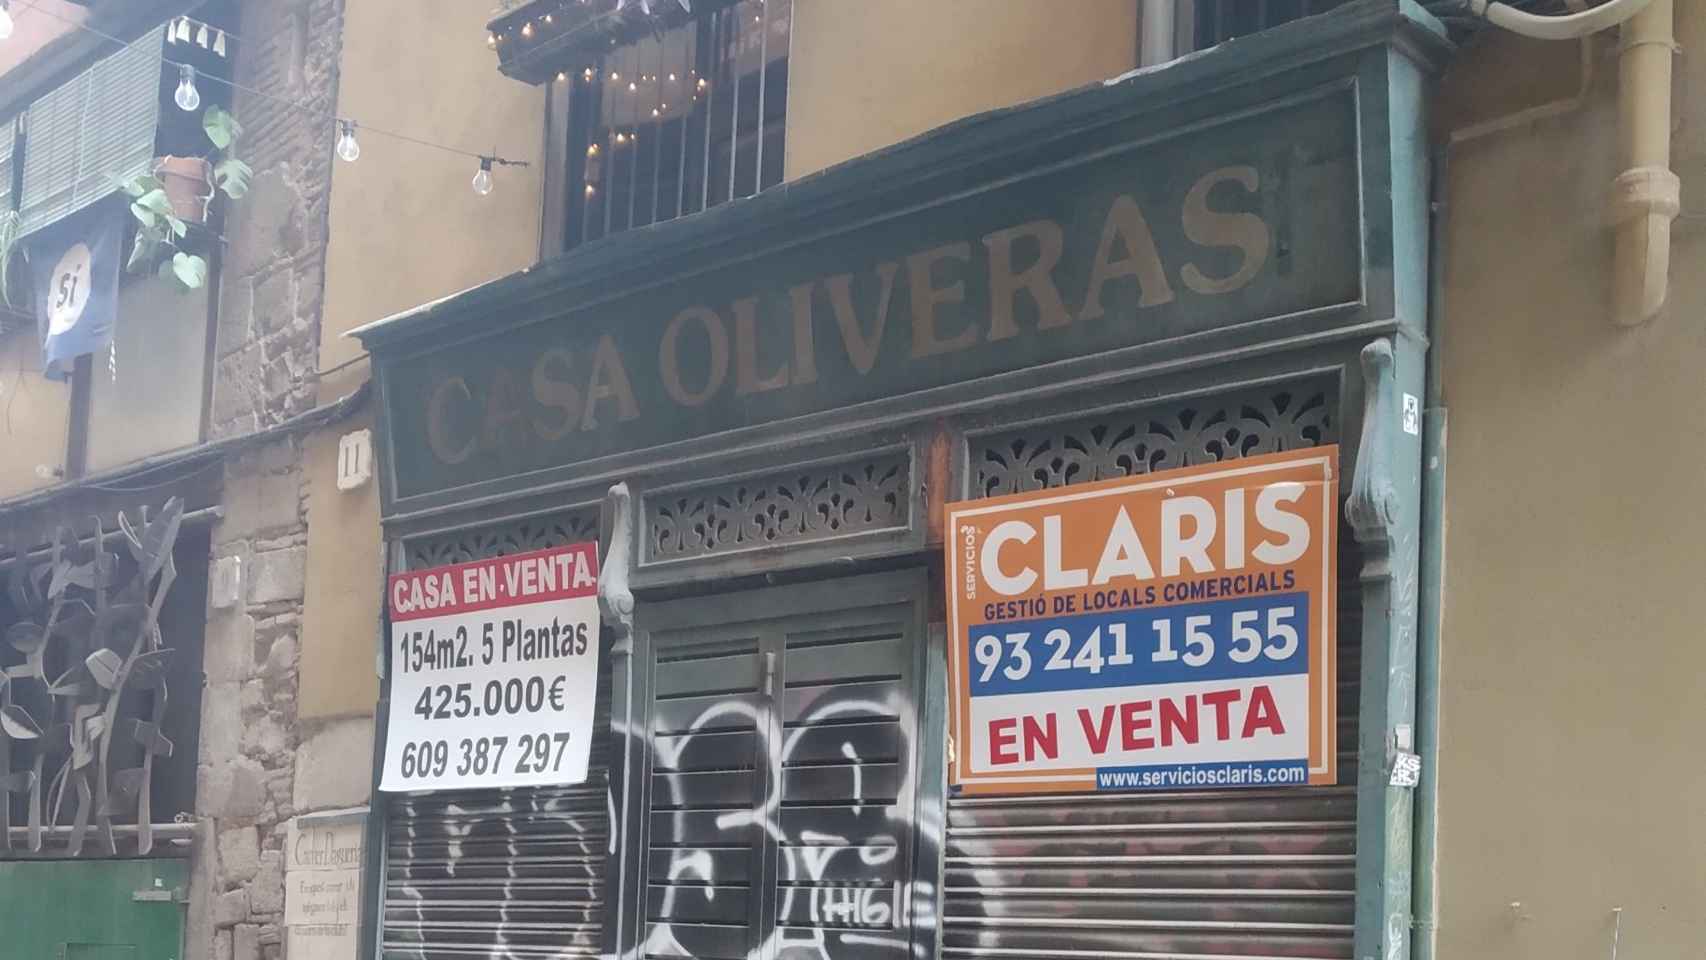 La tienda Casa Oliveras del Gòtic, en venta / METRÓPOLI ABIERTA - JORDI SUBIRANA